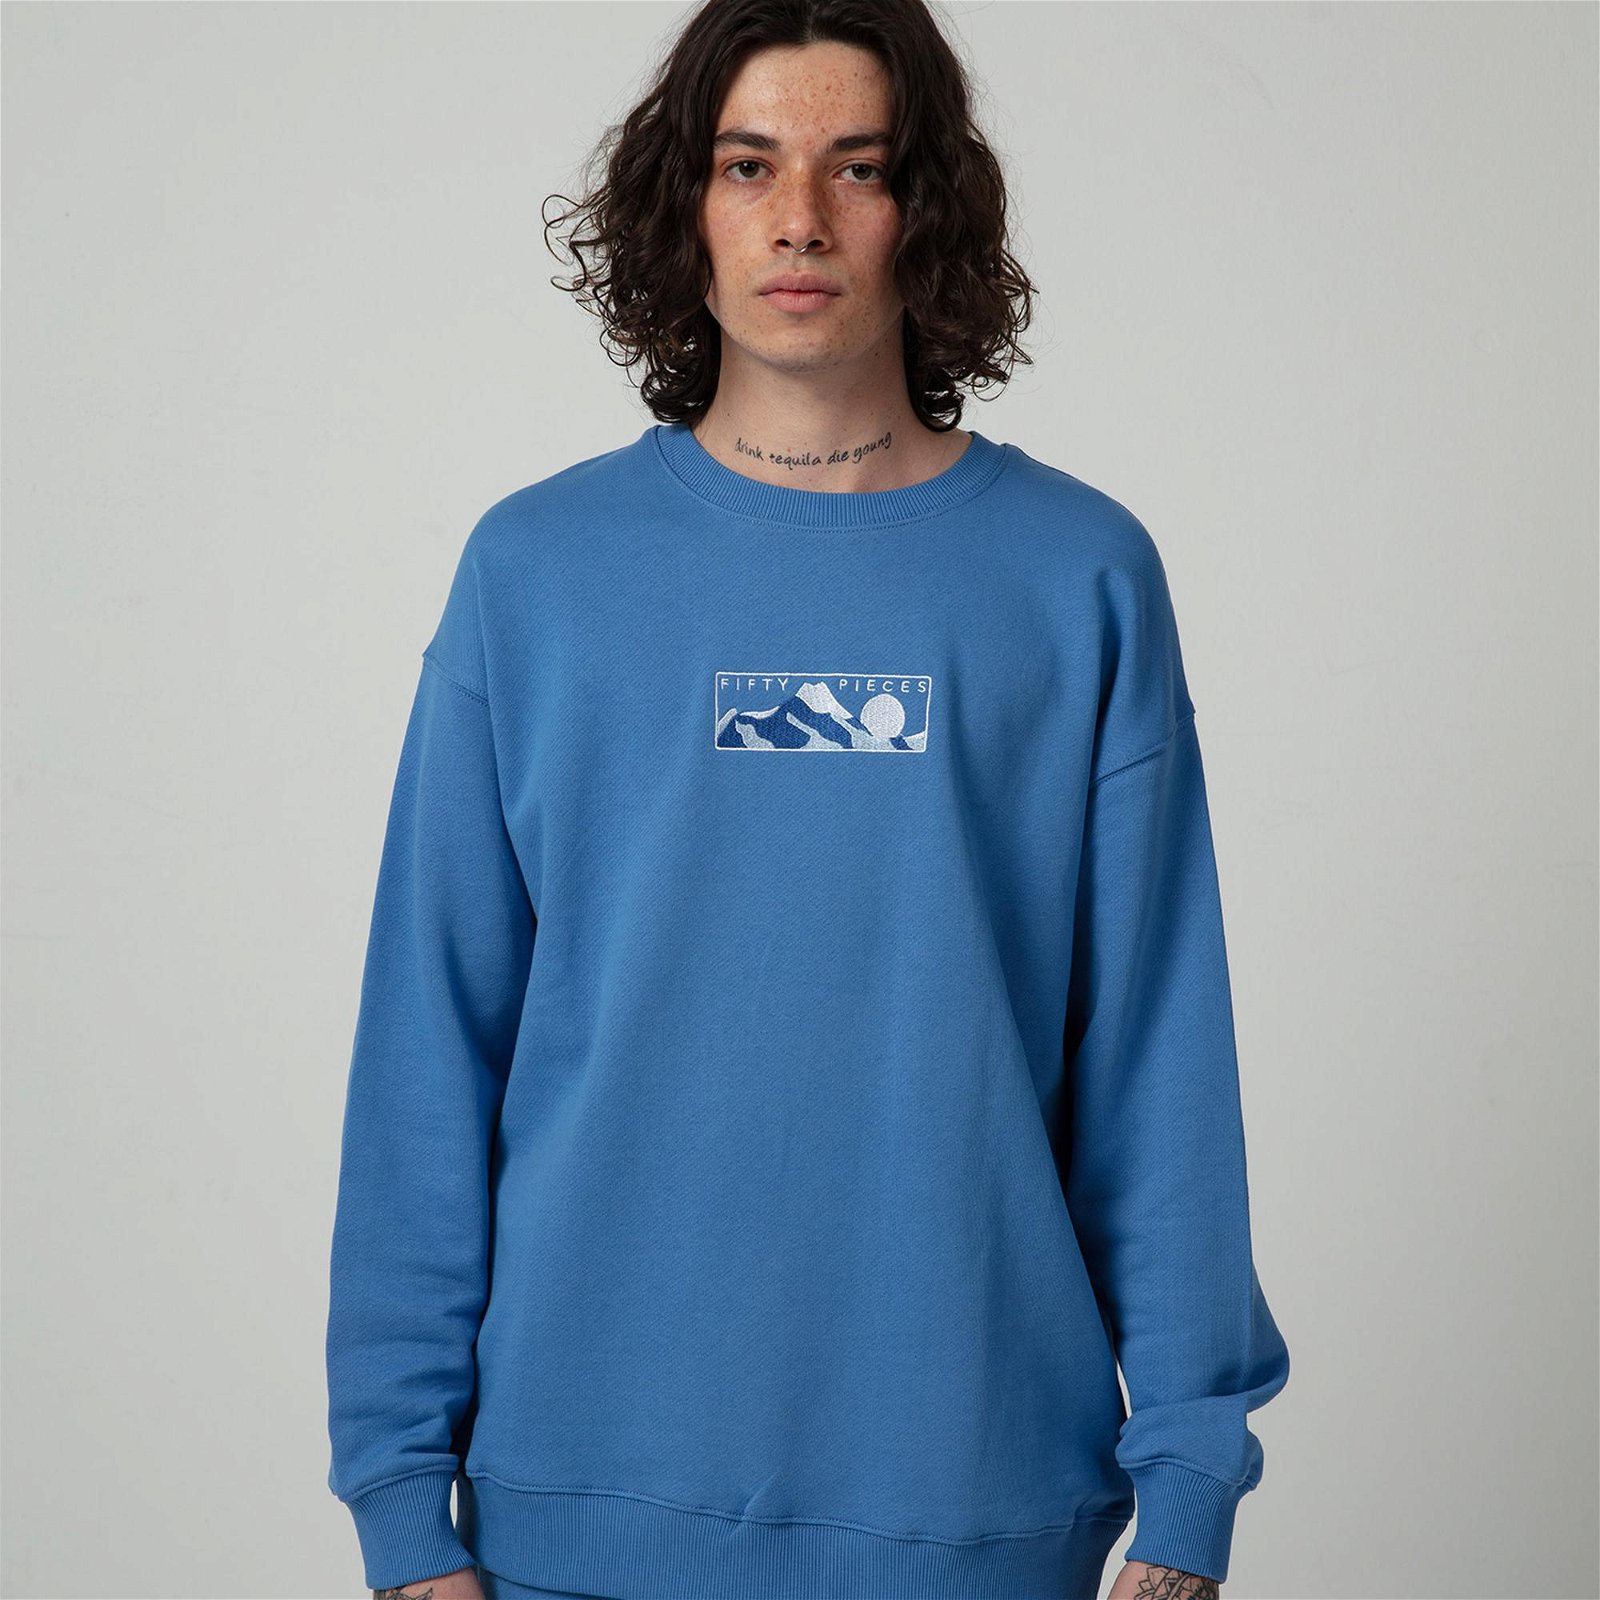 Fifty Pieces Düşük Omuzlu Erkek Lacivert Sweatshirt